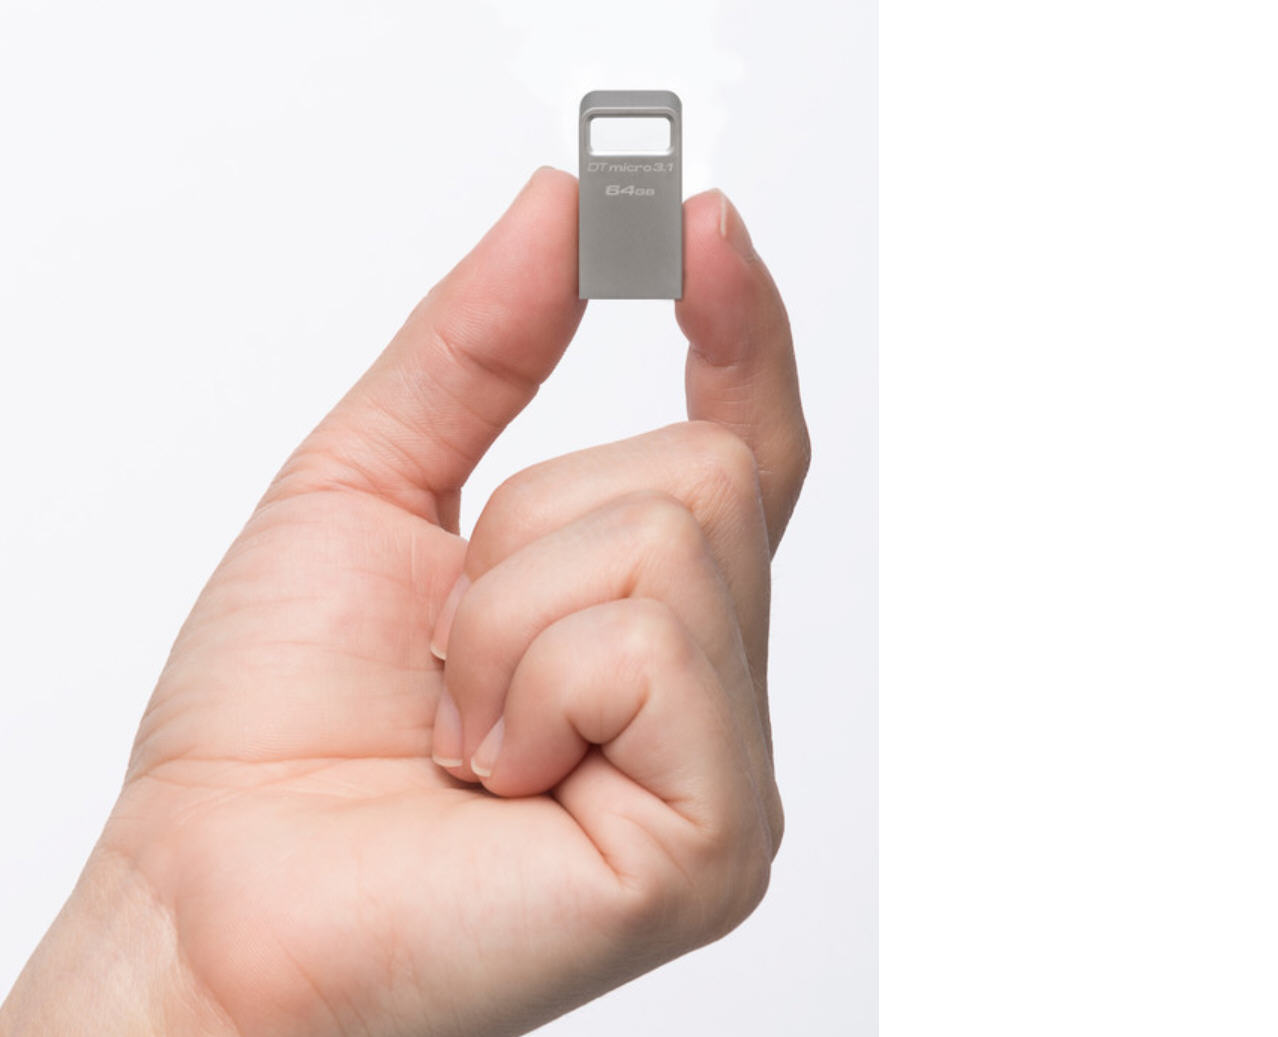 Kingston Digital announces new USB Type-C flash drive